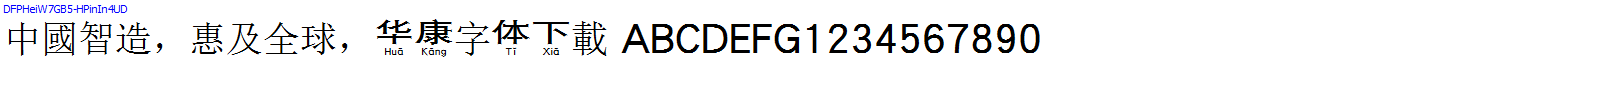 華康字體DFPHeiW7GB5-HPinIn4UD.TTF